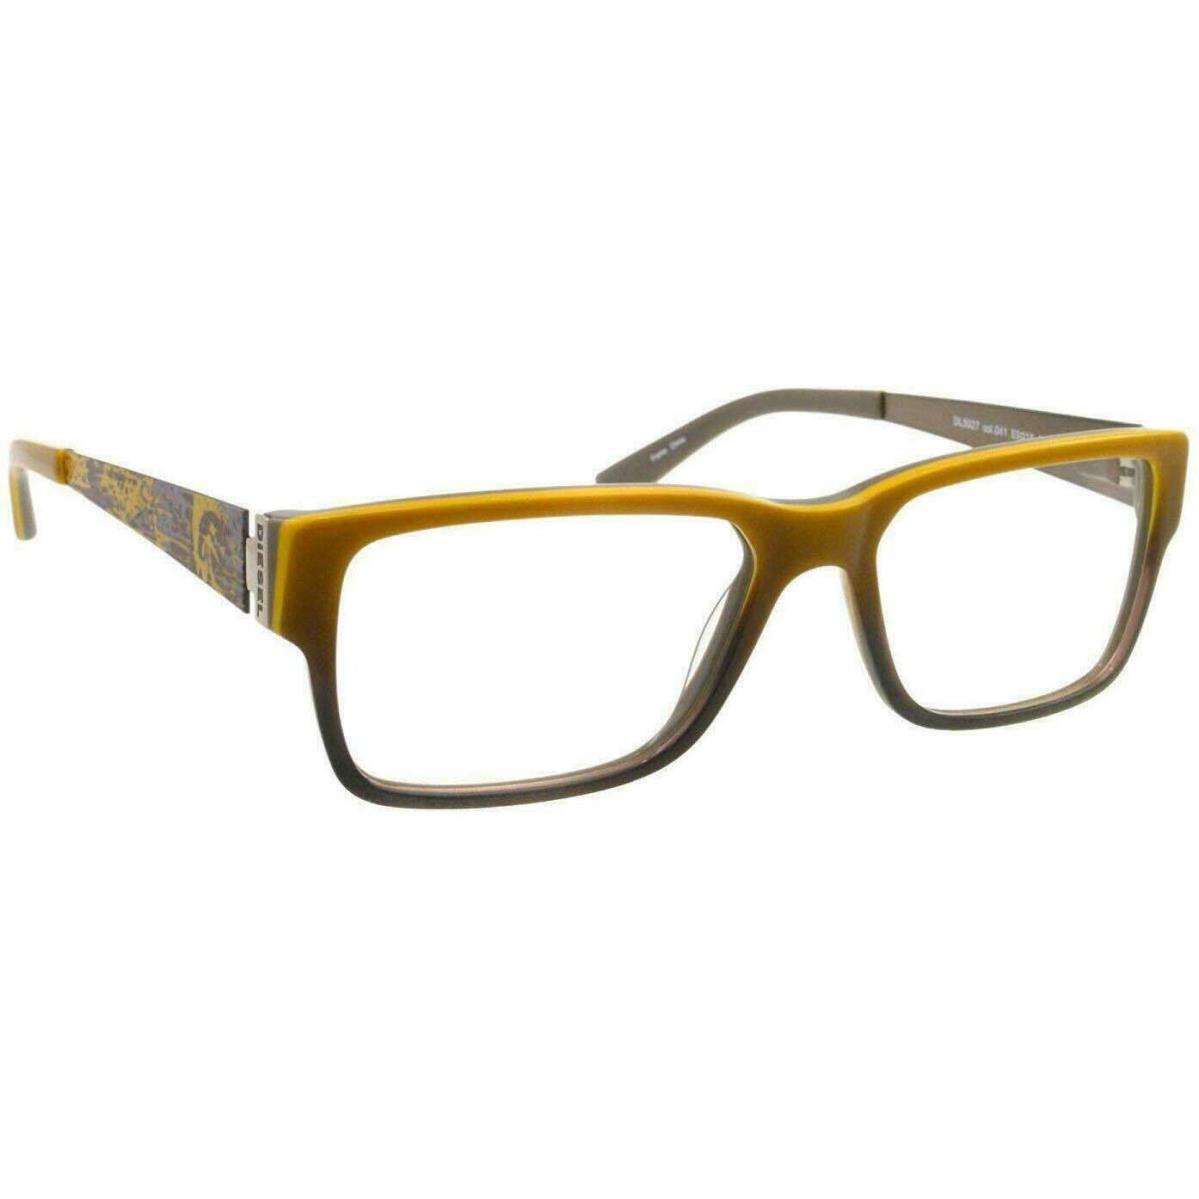 NEWT100%AUTH Diesel DL5027 55/16/140 Brown Golden Eyeglasses Frames W/ Hard Case